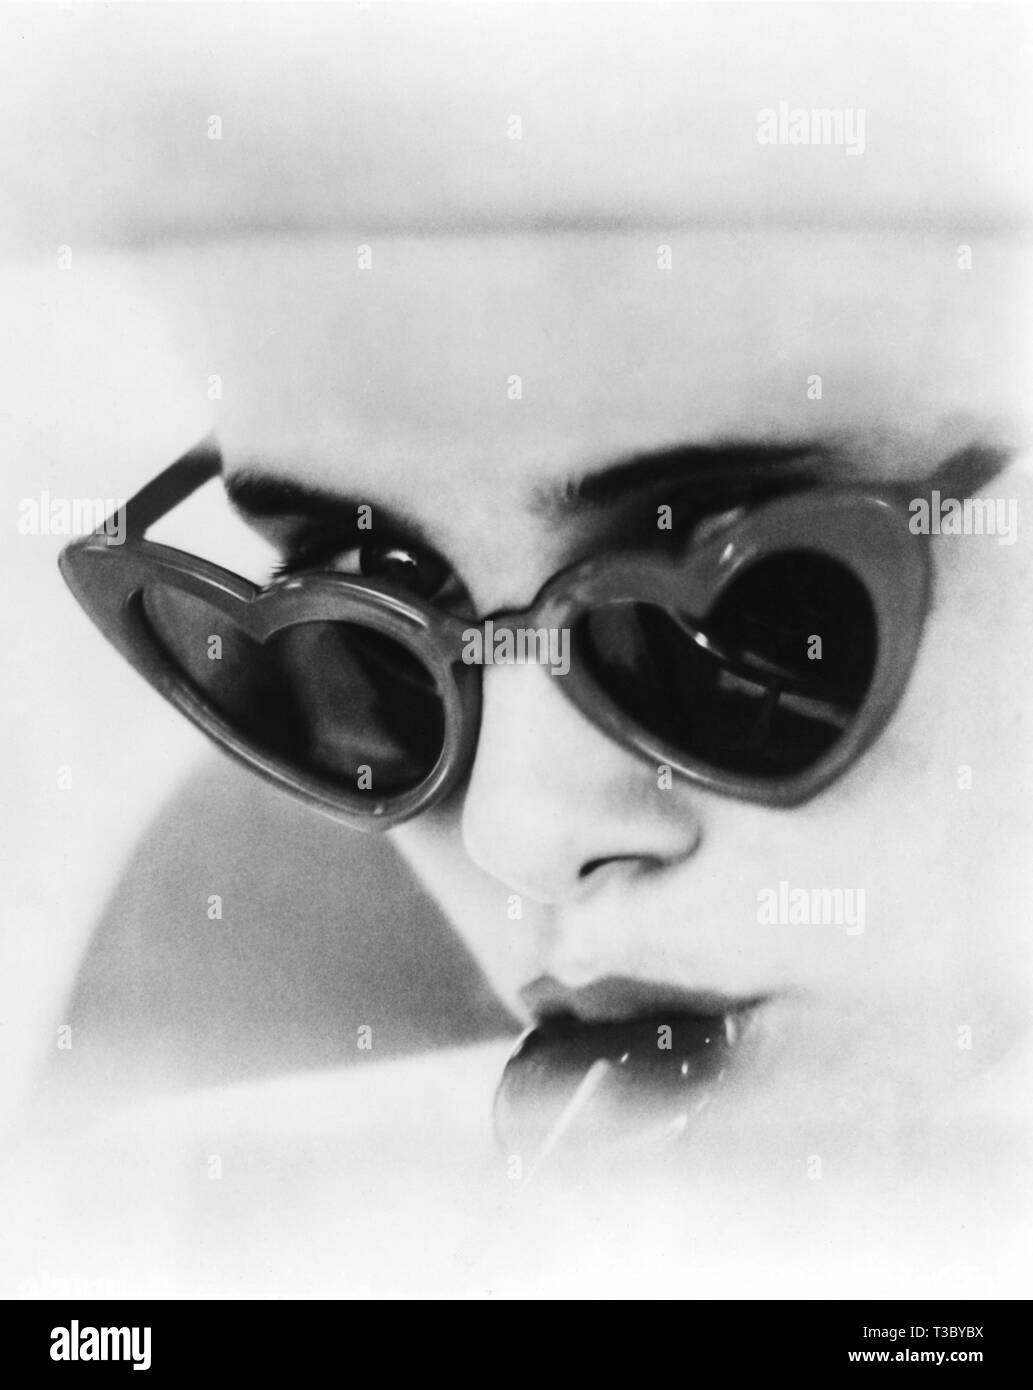 SUE LYON as LOLITA 1962 director Stanley Kubrick novel and screenplay Vladimir Nabokov  A.A. Productions Ltd / Anya / Harris-Kubrick Productions / Transworld Pictures / Metro Goldwyn Mayer Stock Photo